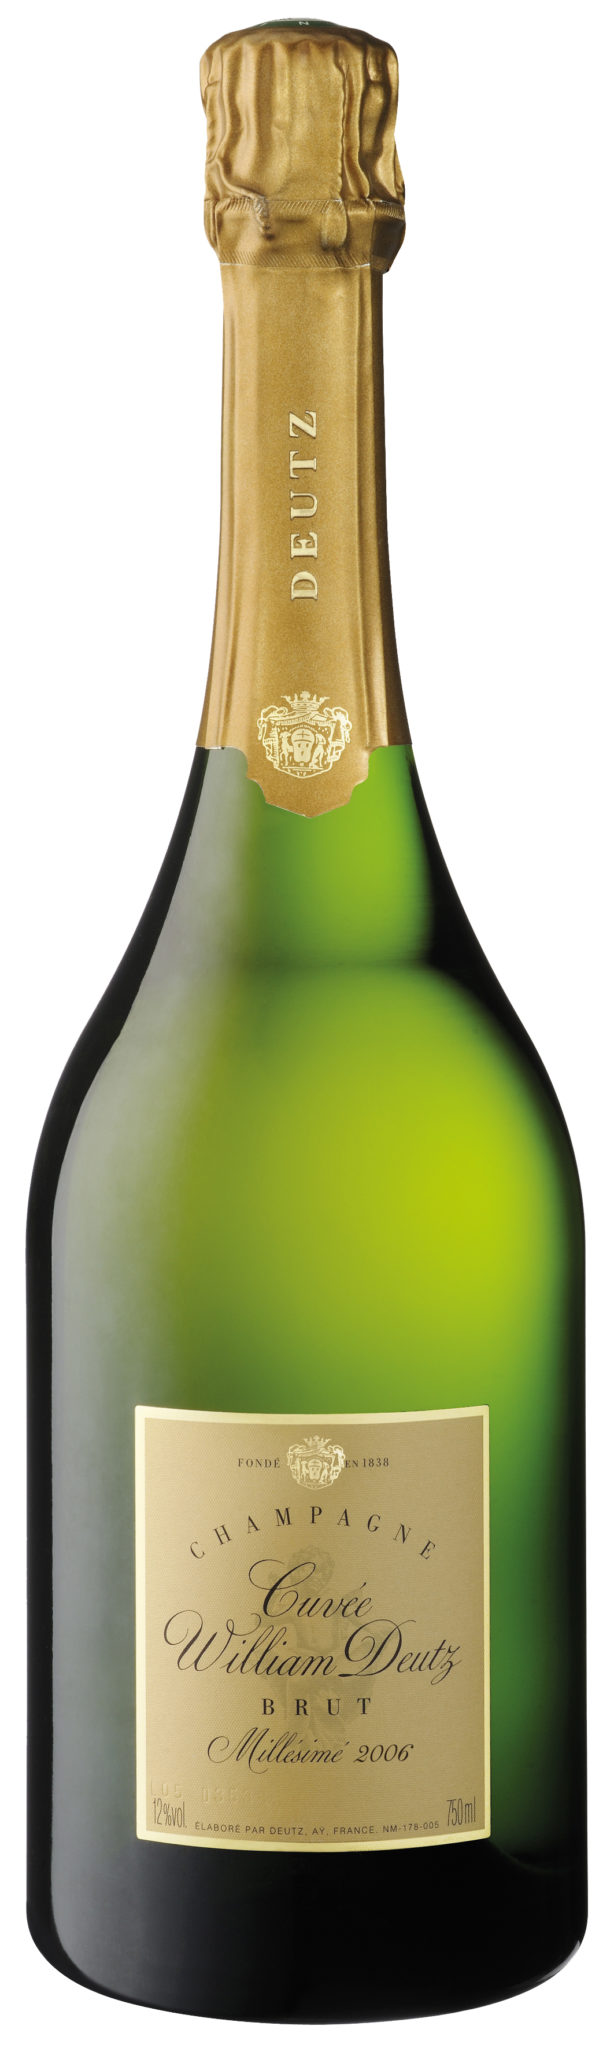 Champagne DEUTZ - Cuvée William Deutz 2006